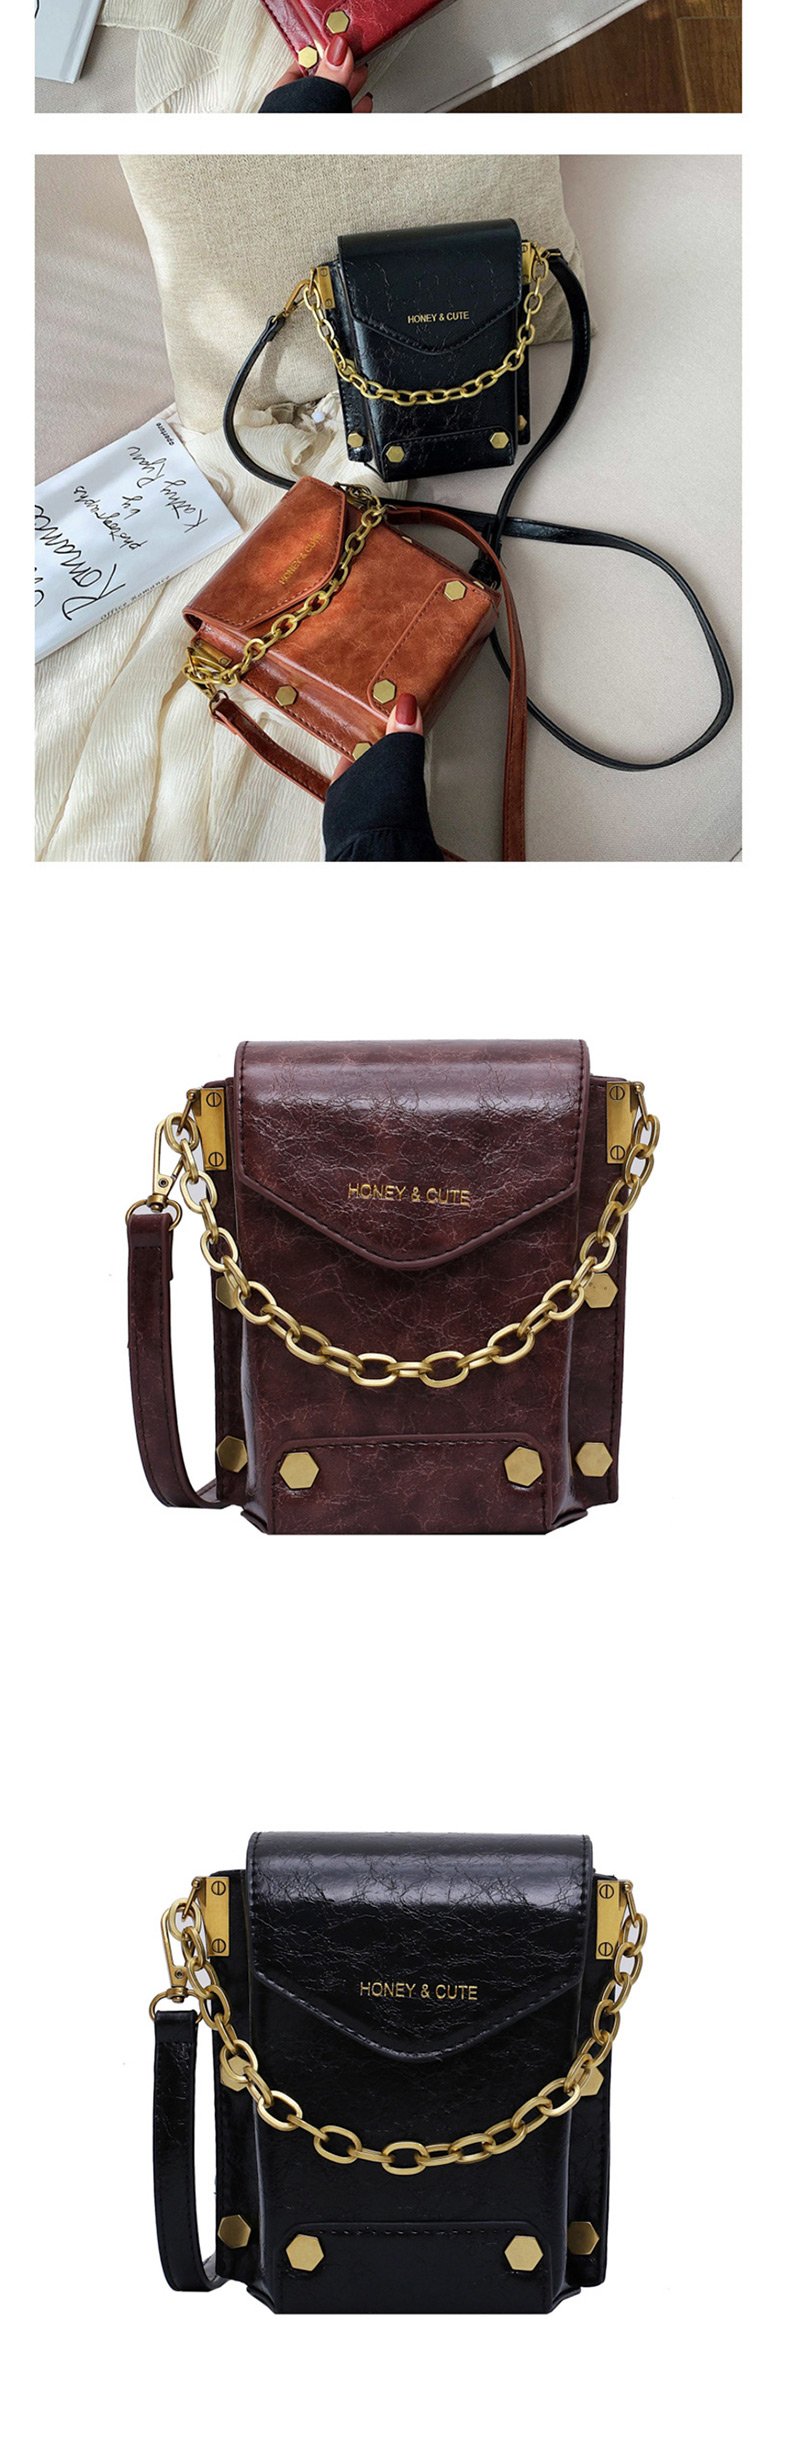 Fashion Red Chain Rivet Shoulder Messenger Bag,Handbags